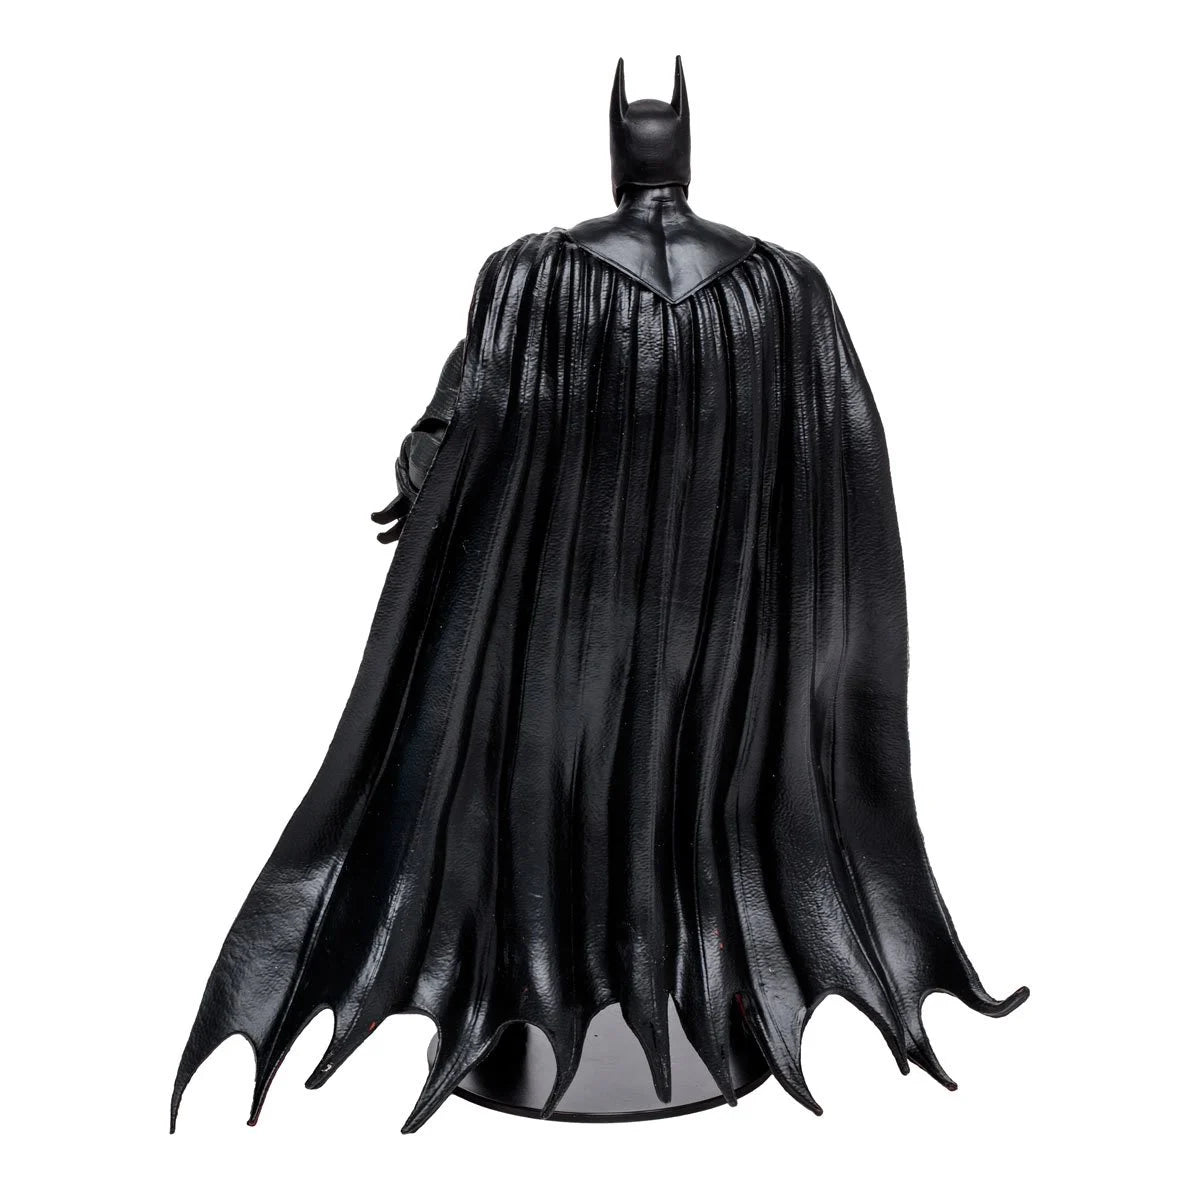 McFarlane Figura de Accion: DC Gaming Batman Arkham Knight - Batman Tierra 2 7 Pulgadas